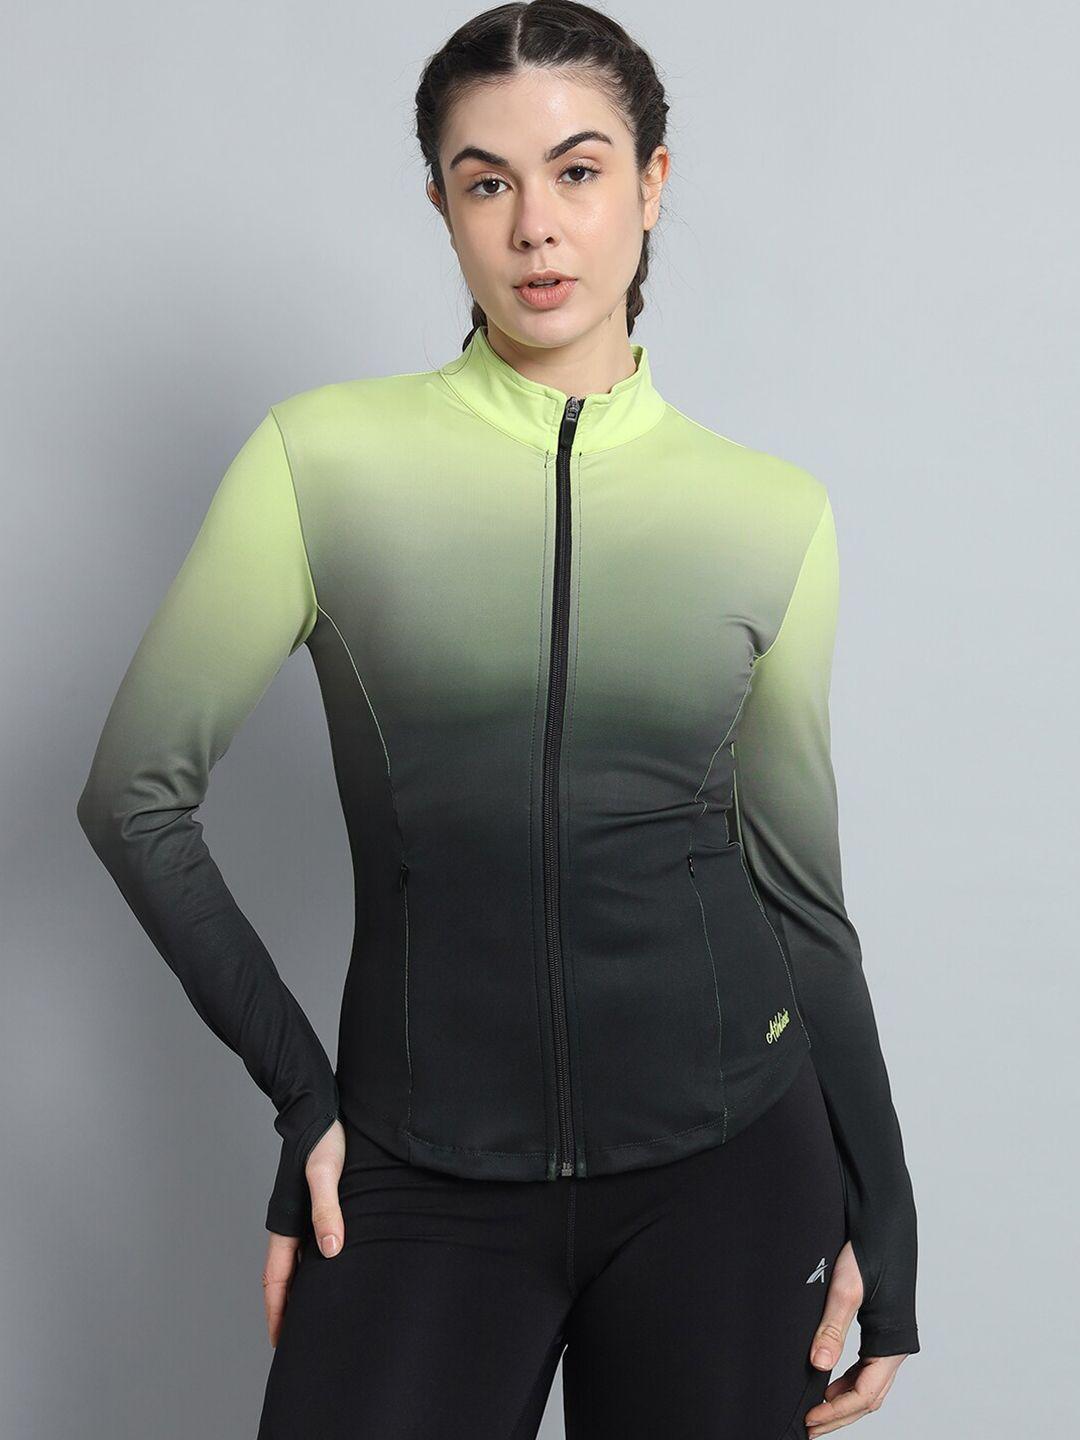 athlisis colourblocked lightweight training or gym sporty jacket